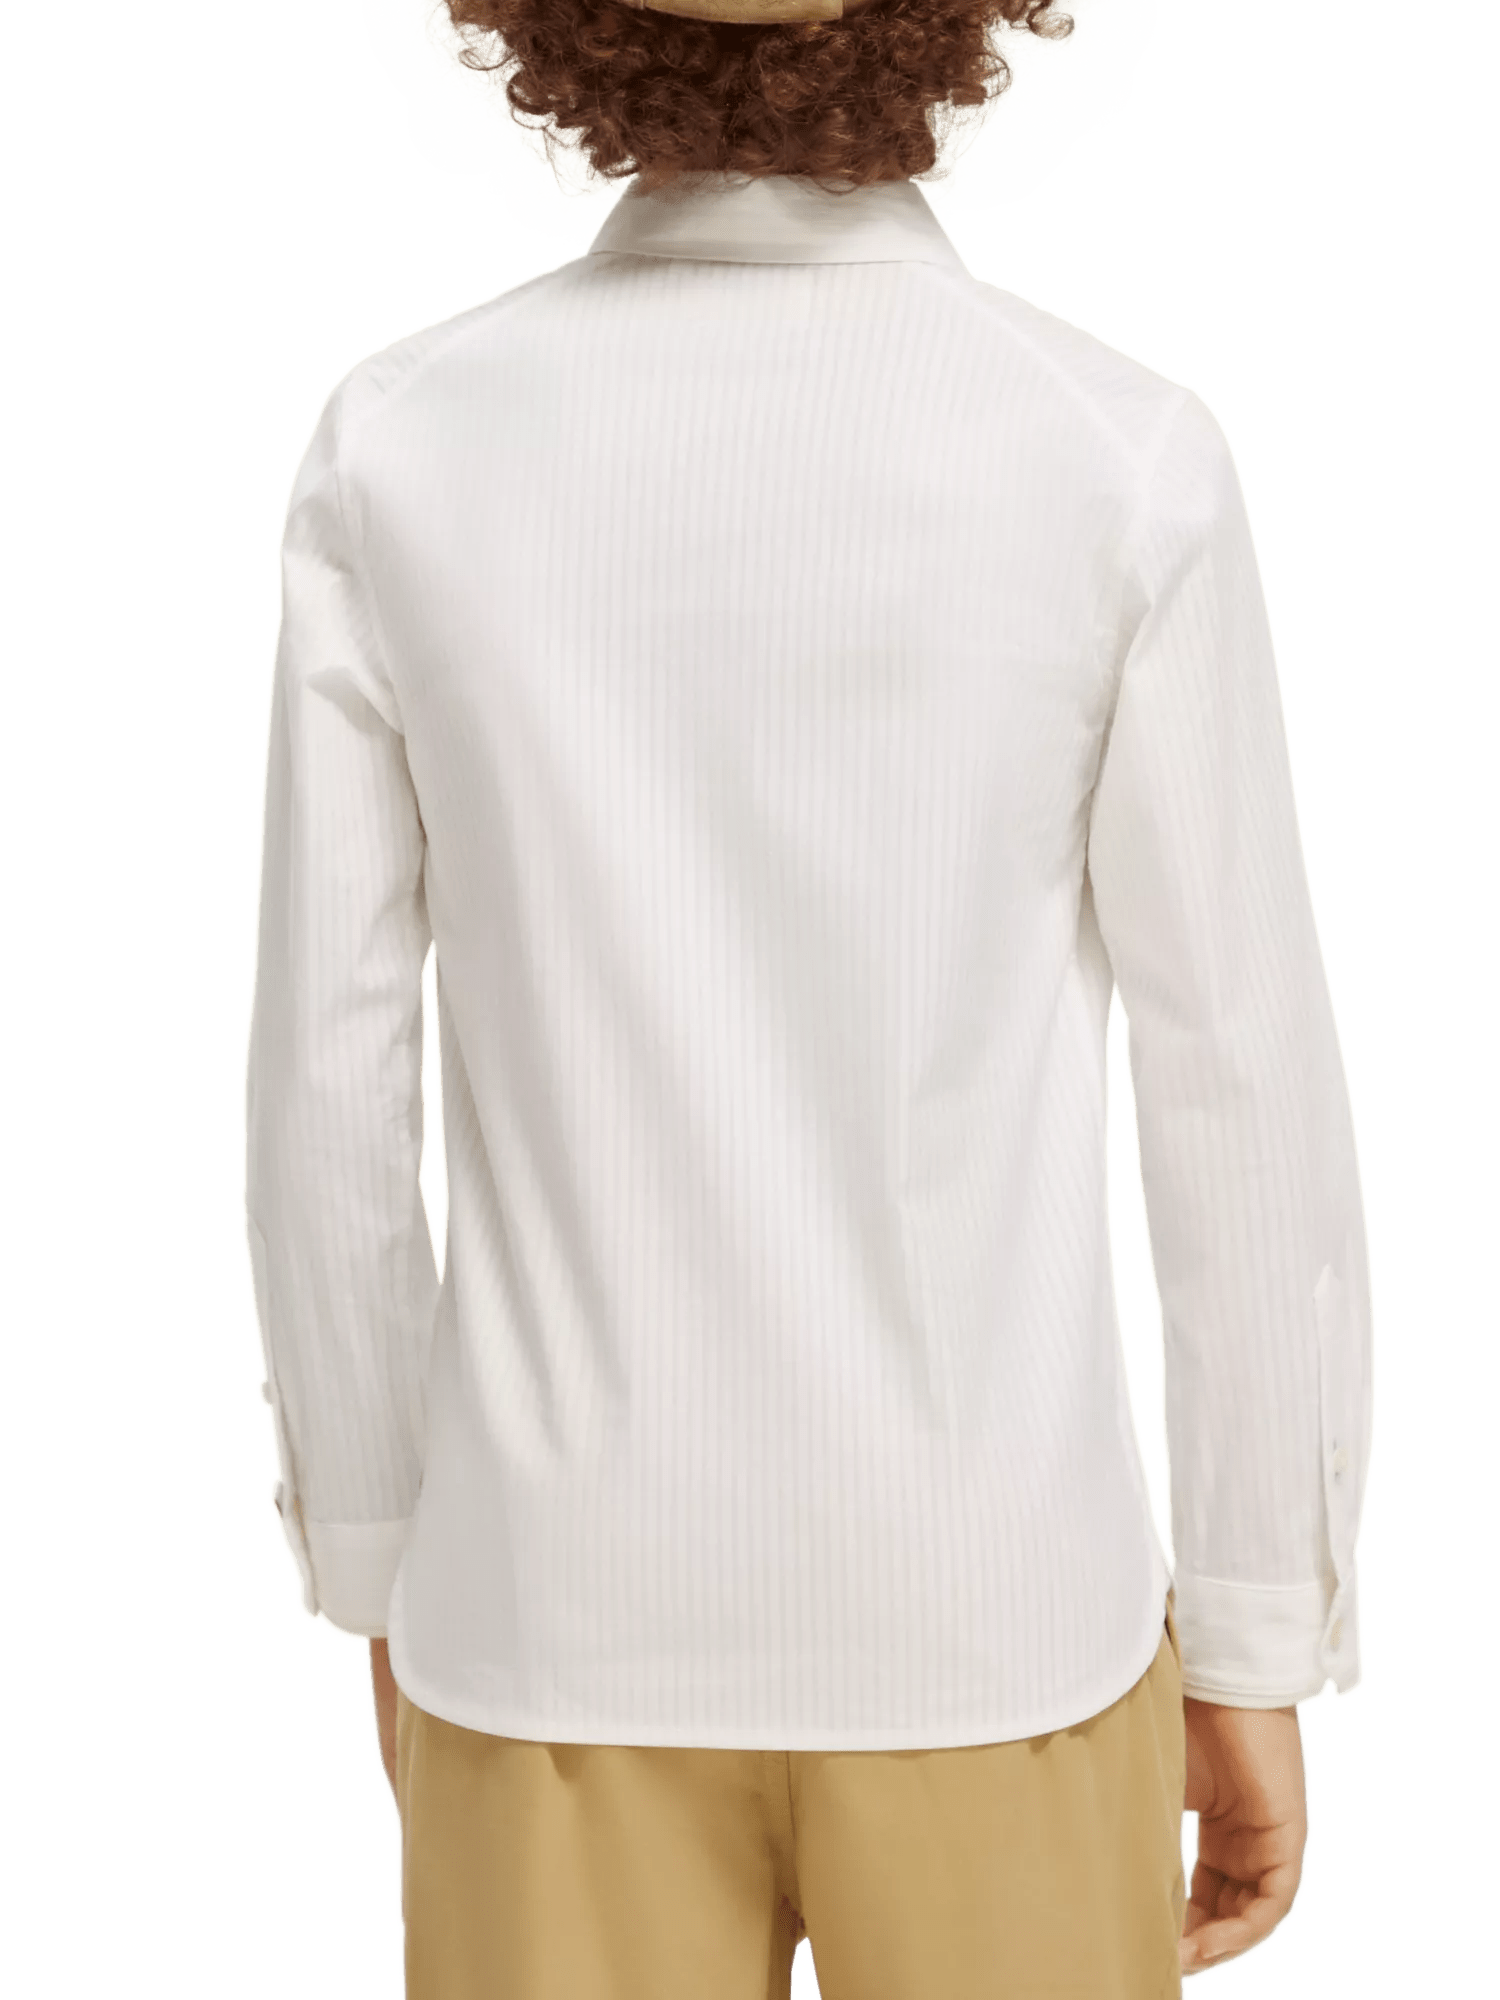 Scotch & Soda Shirt im Slim Fit aus Bio-Baumwolle NHD-BCK